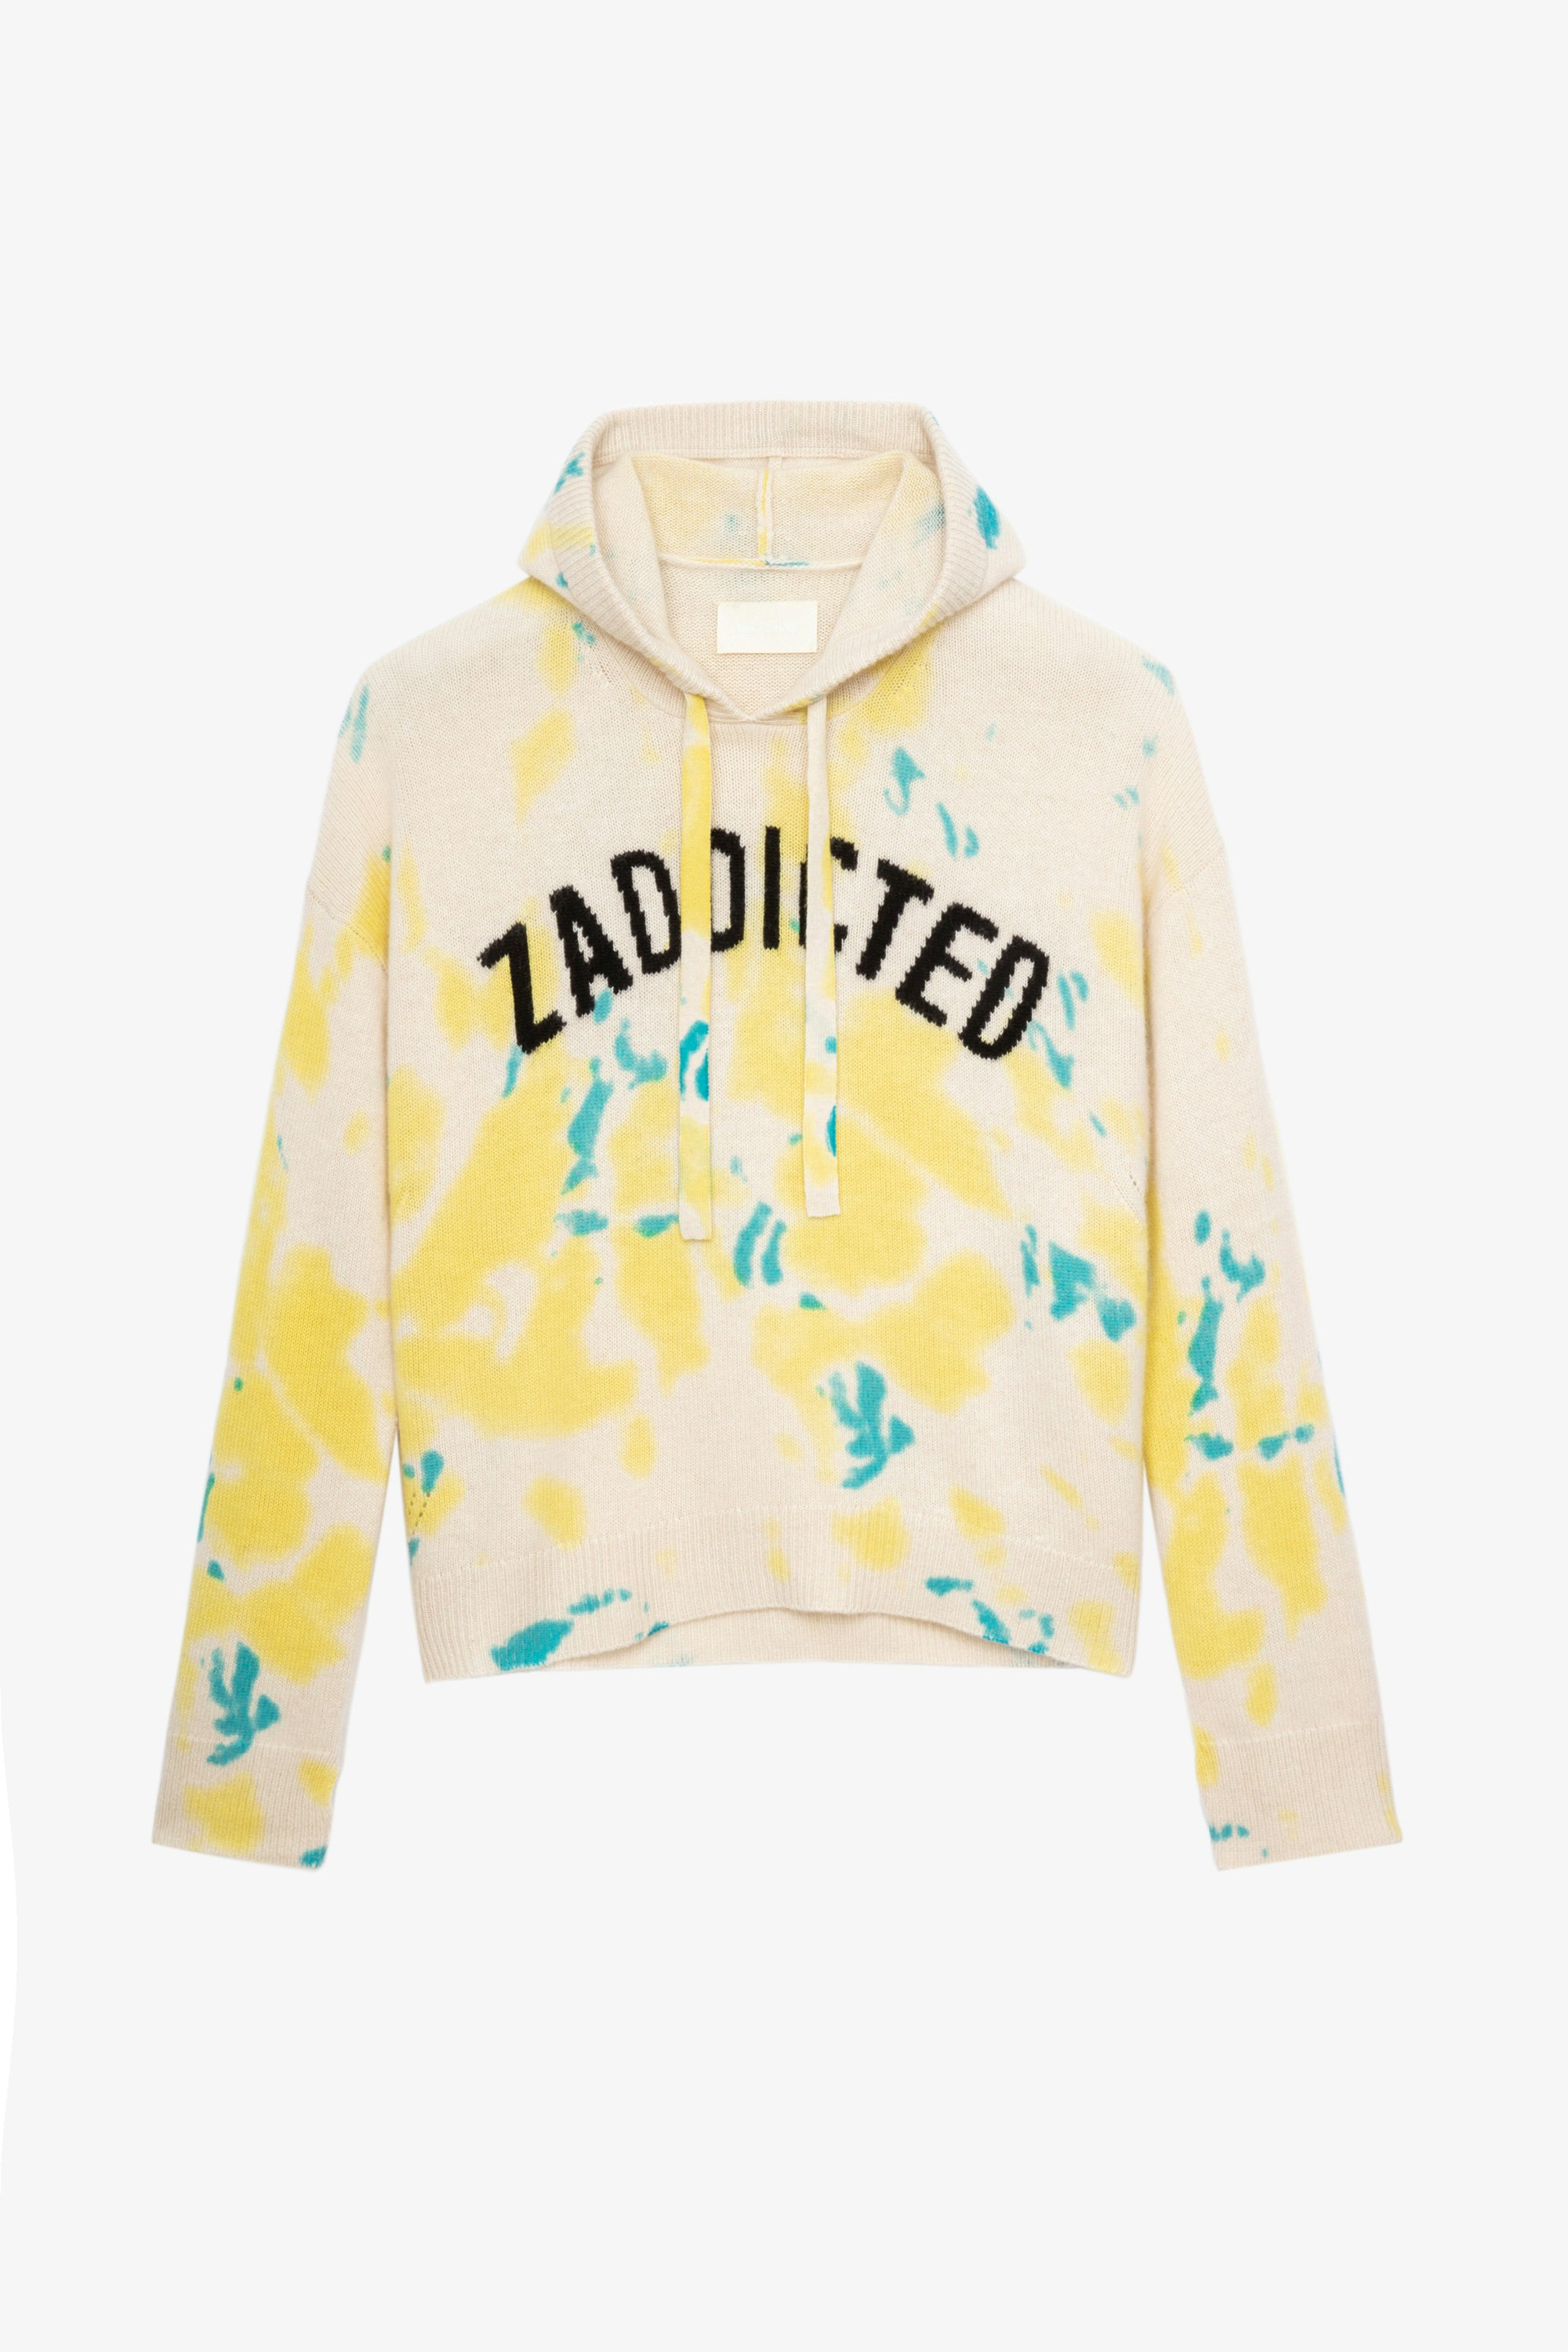 Marky カシミヤ ニット Women’s tie-dye cashmere hoodie with “Zaddicted” slogan